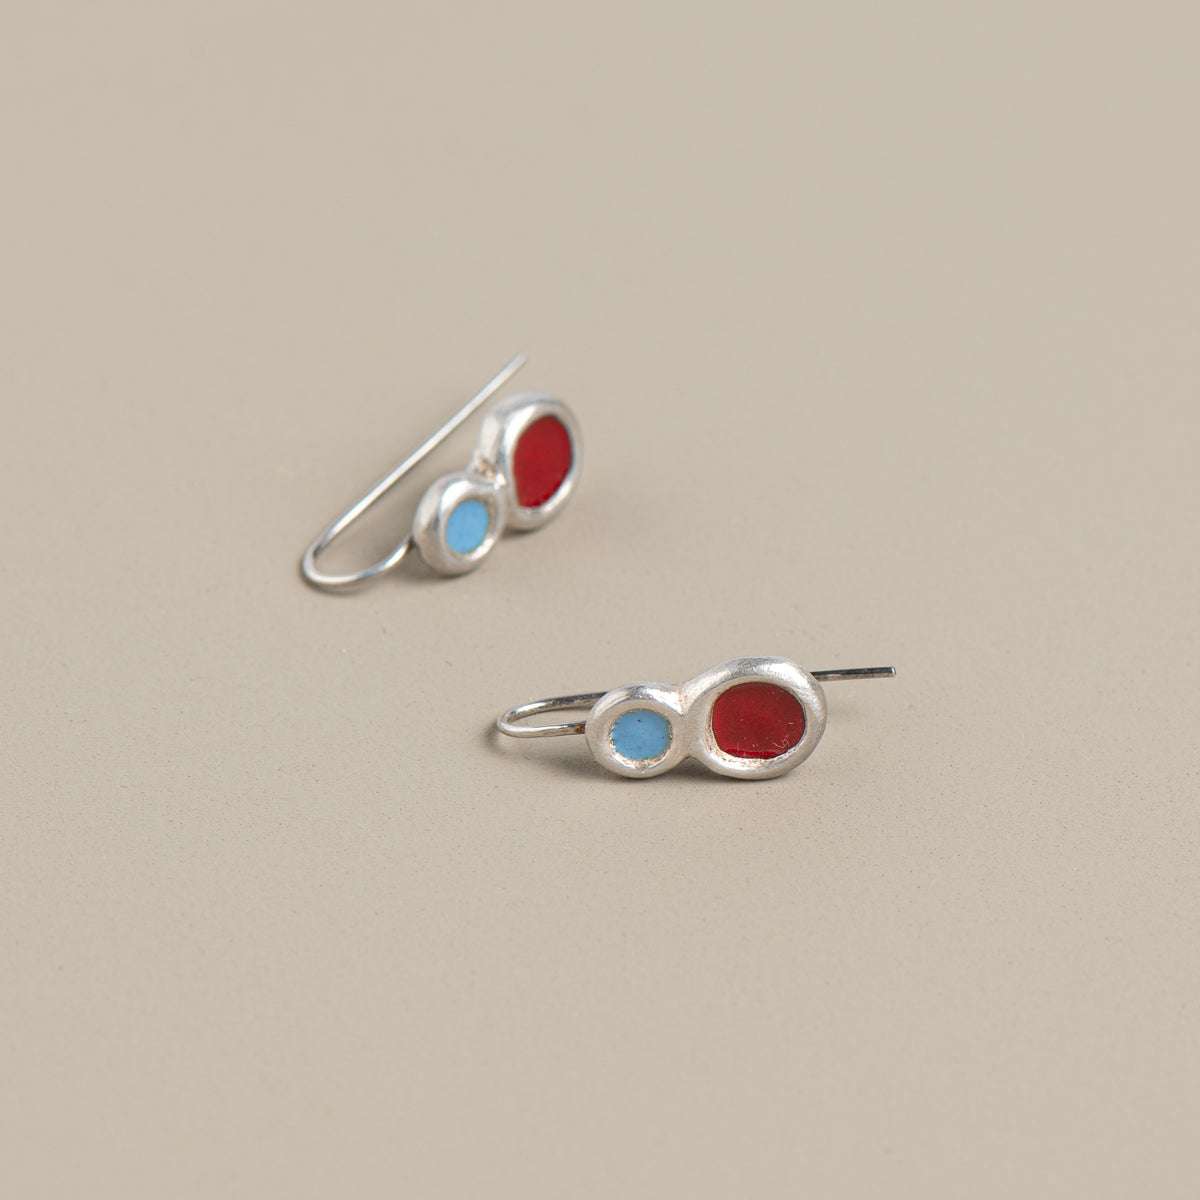 Jelly Baby Earrings (red + blue)